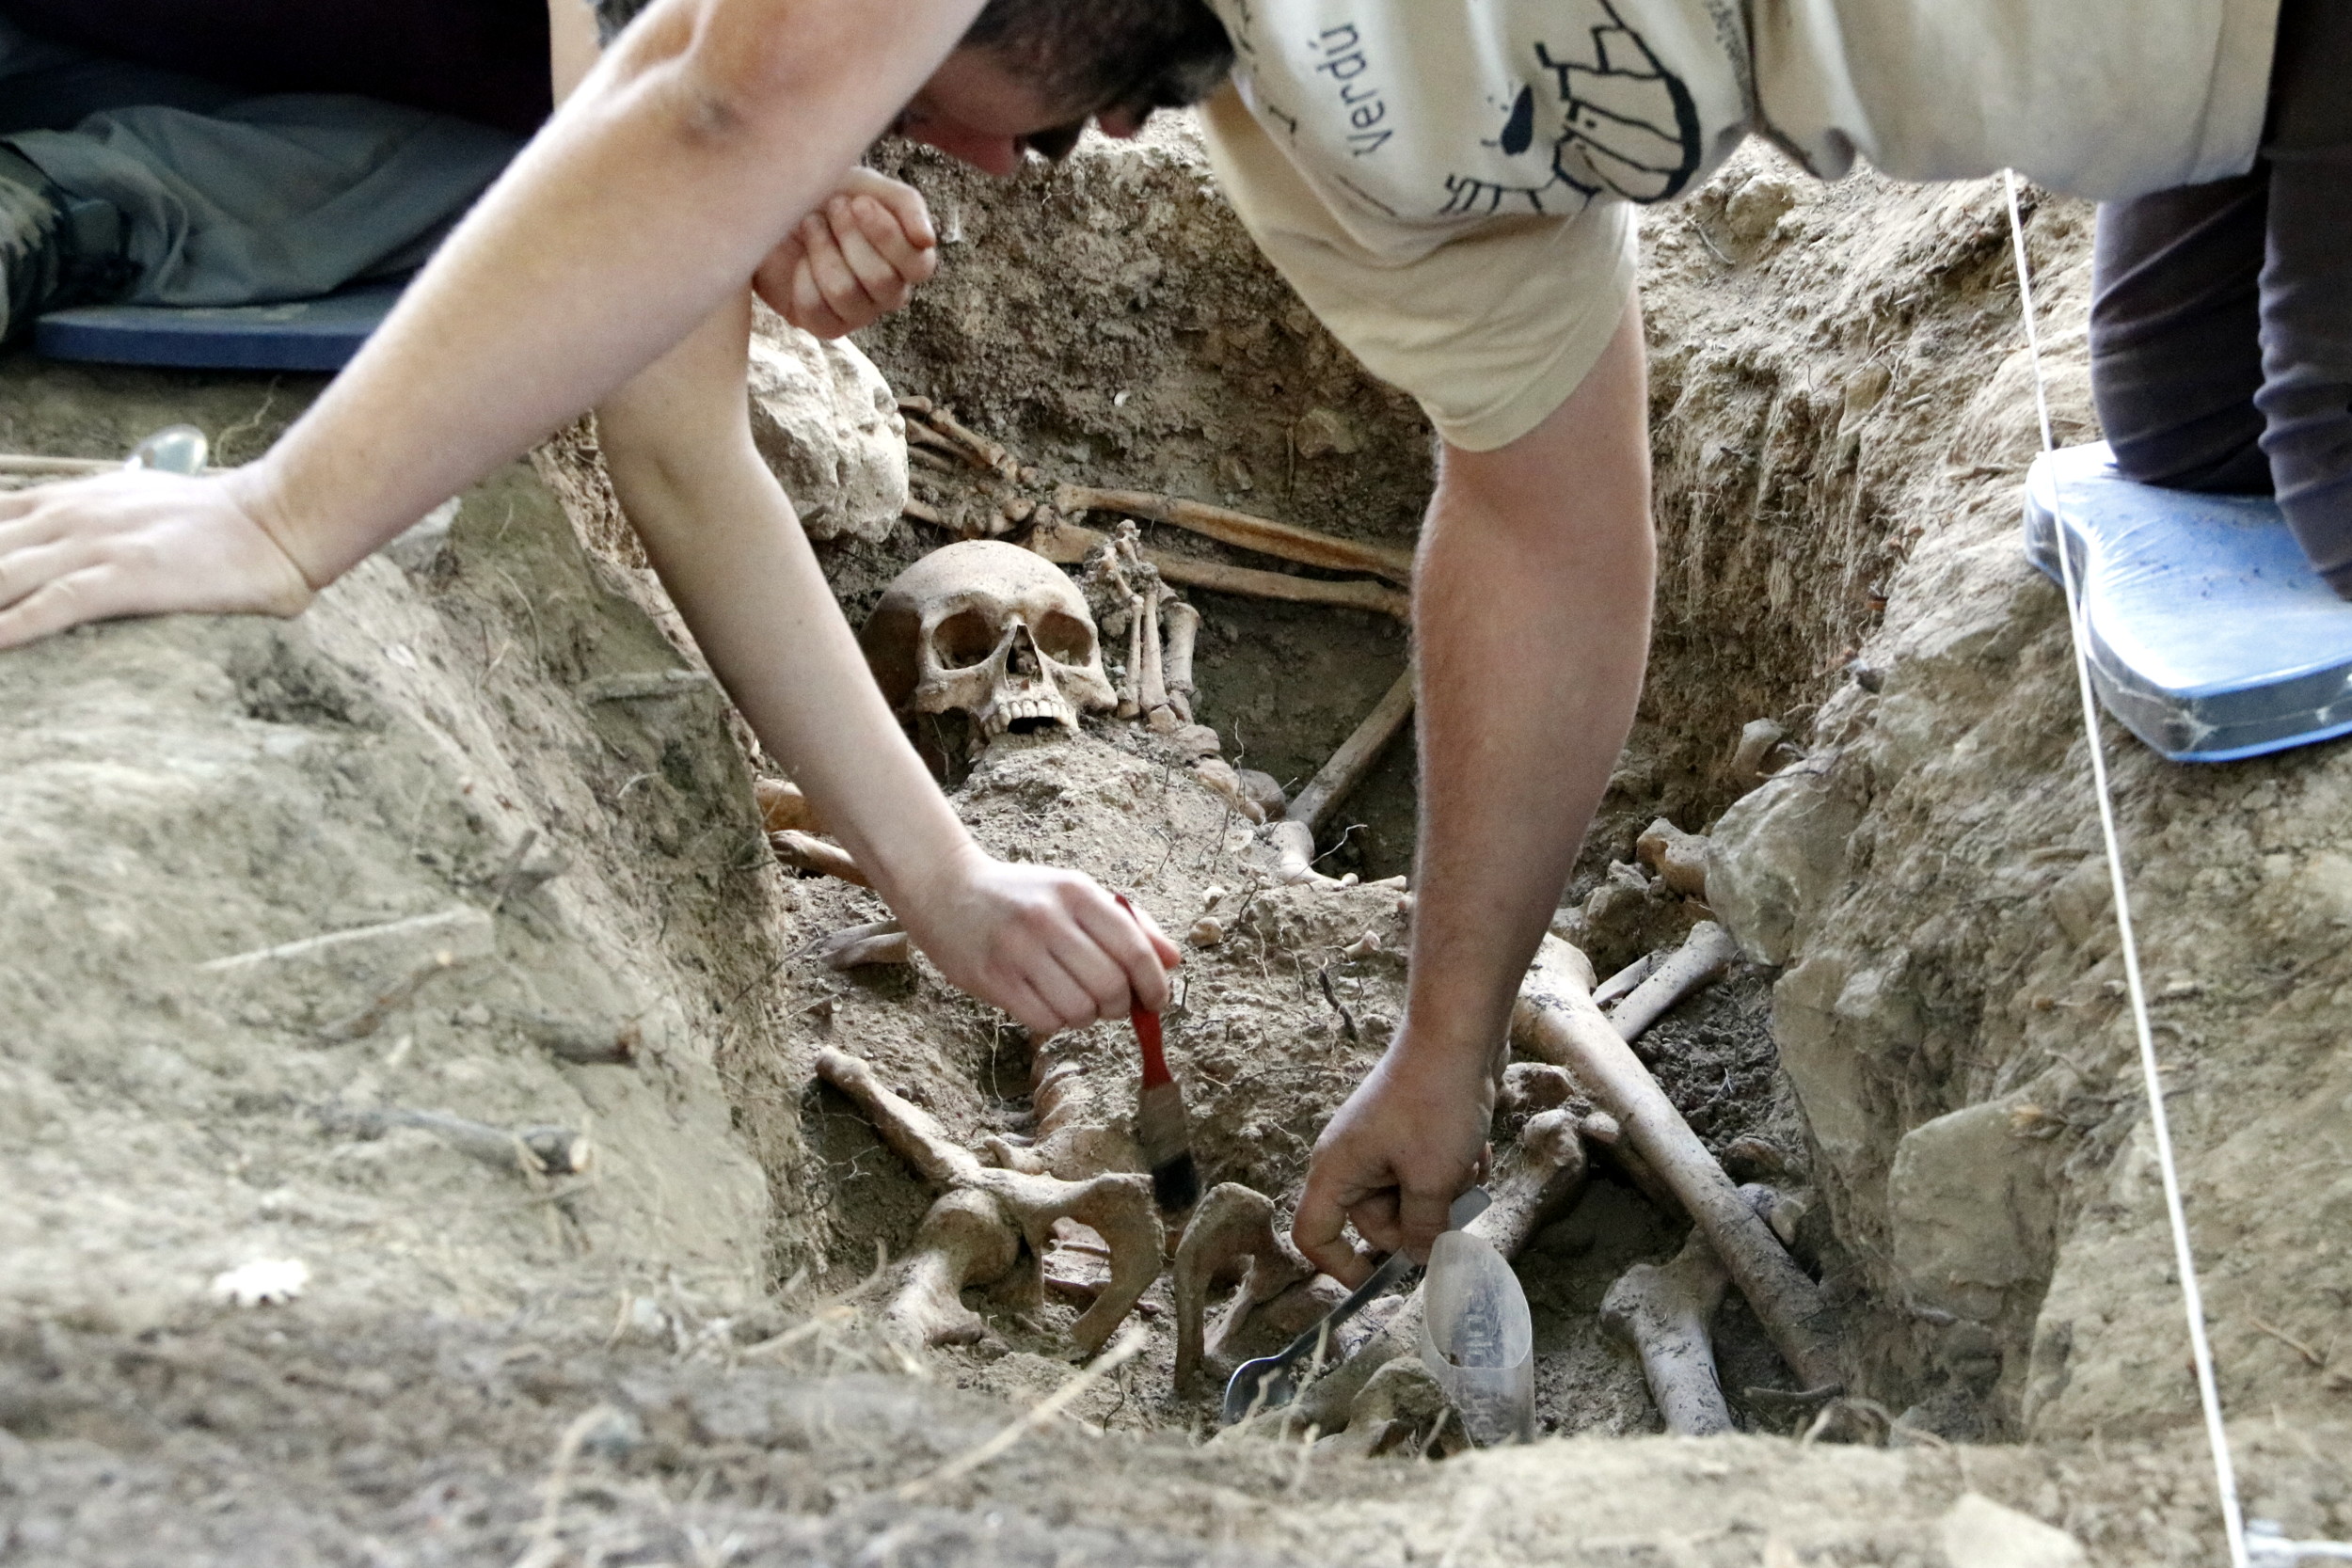 One of the skeletons found in Prats de Lluçanès (by ACN)